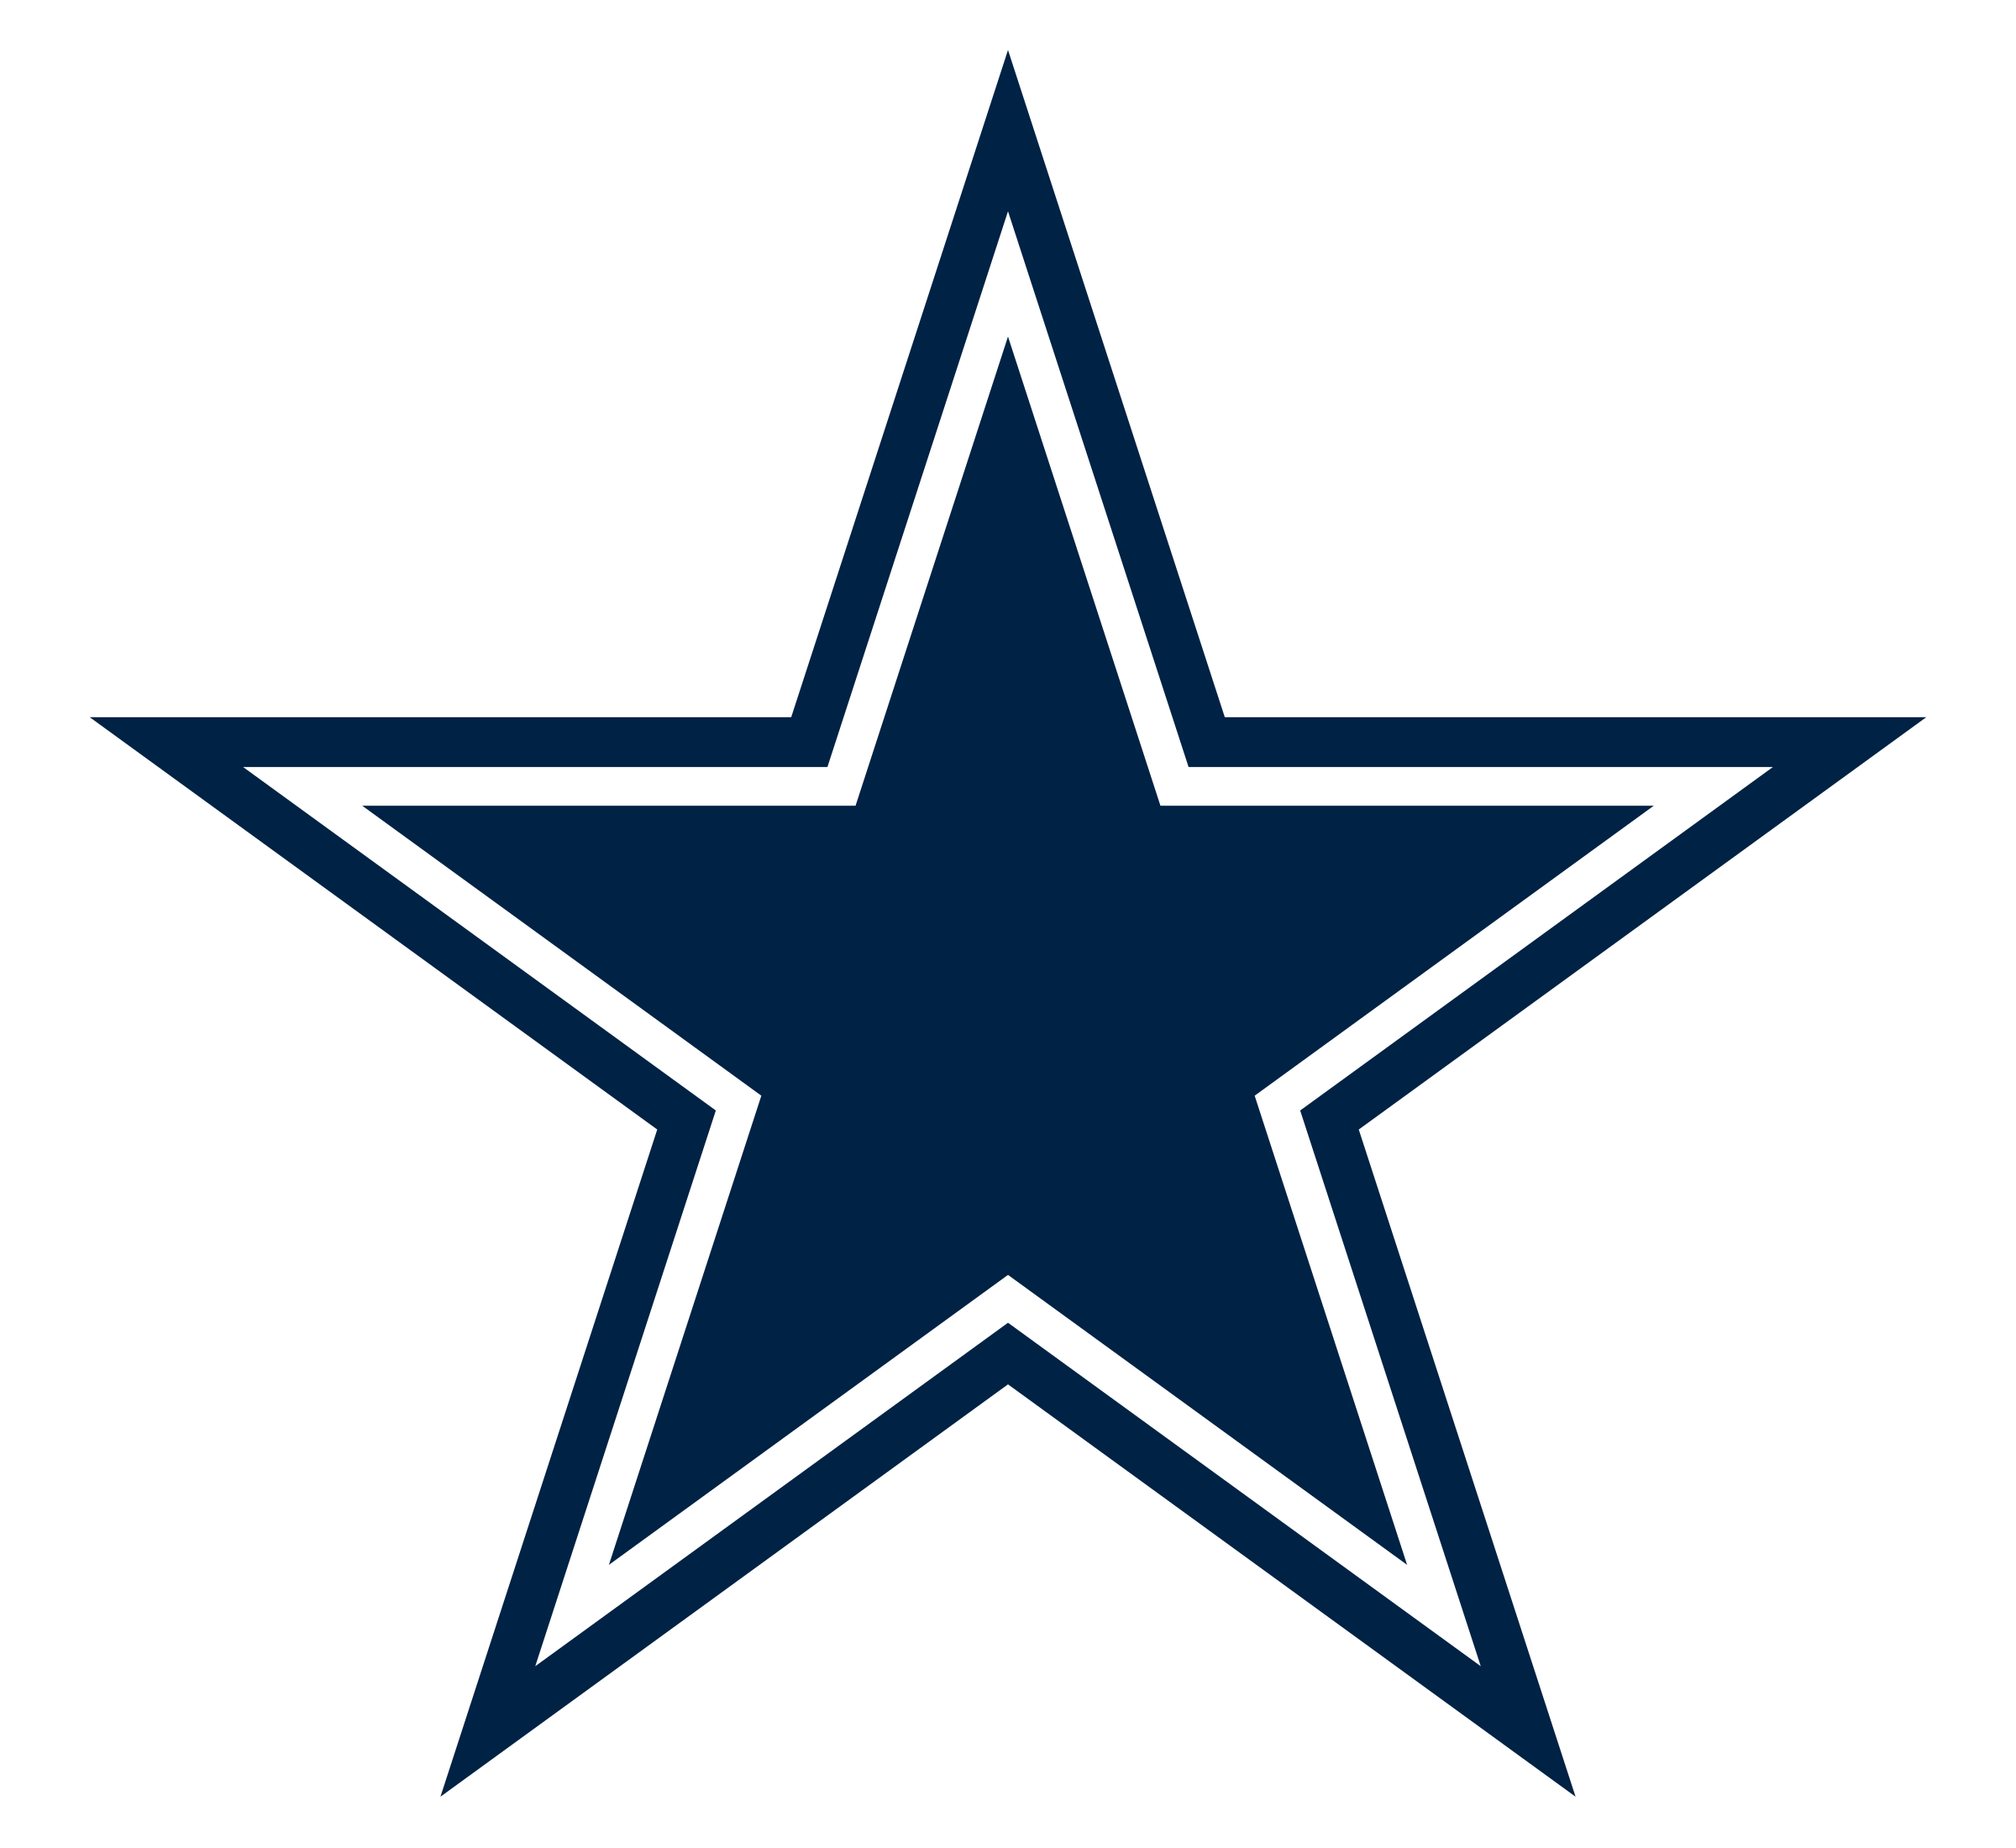 Dallas Cowboys Logo Png - Goo